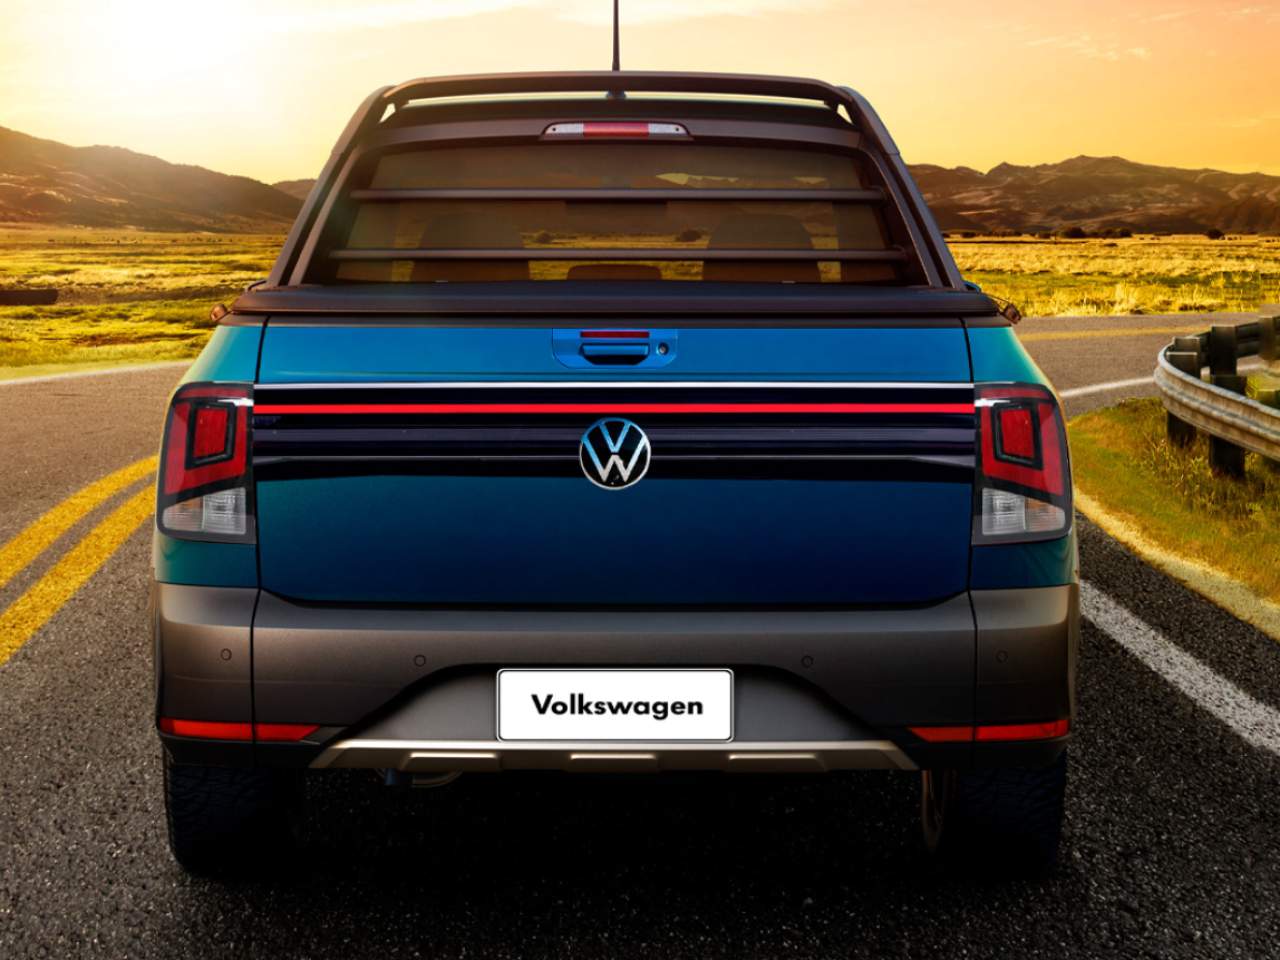 The Volkswagen Saveiro